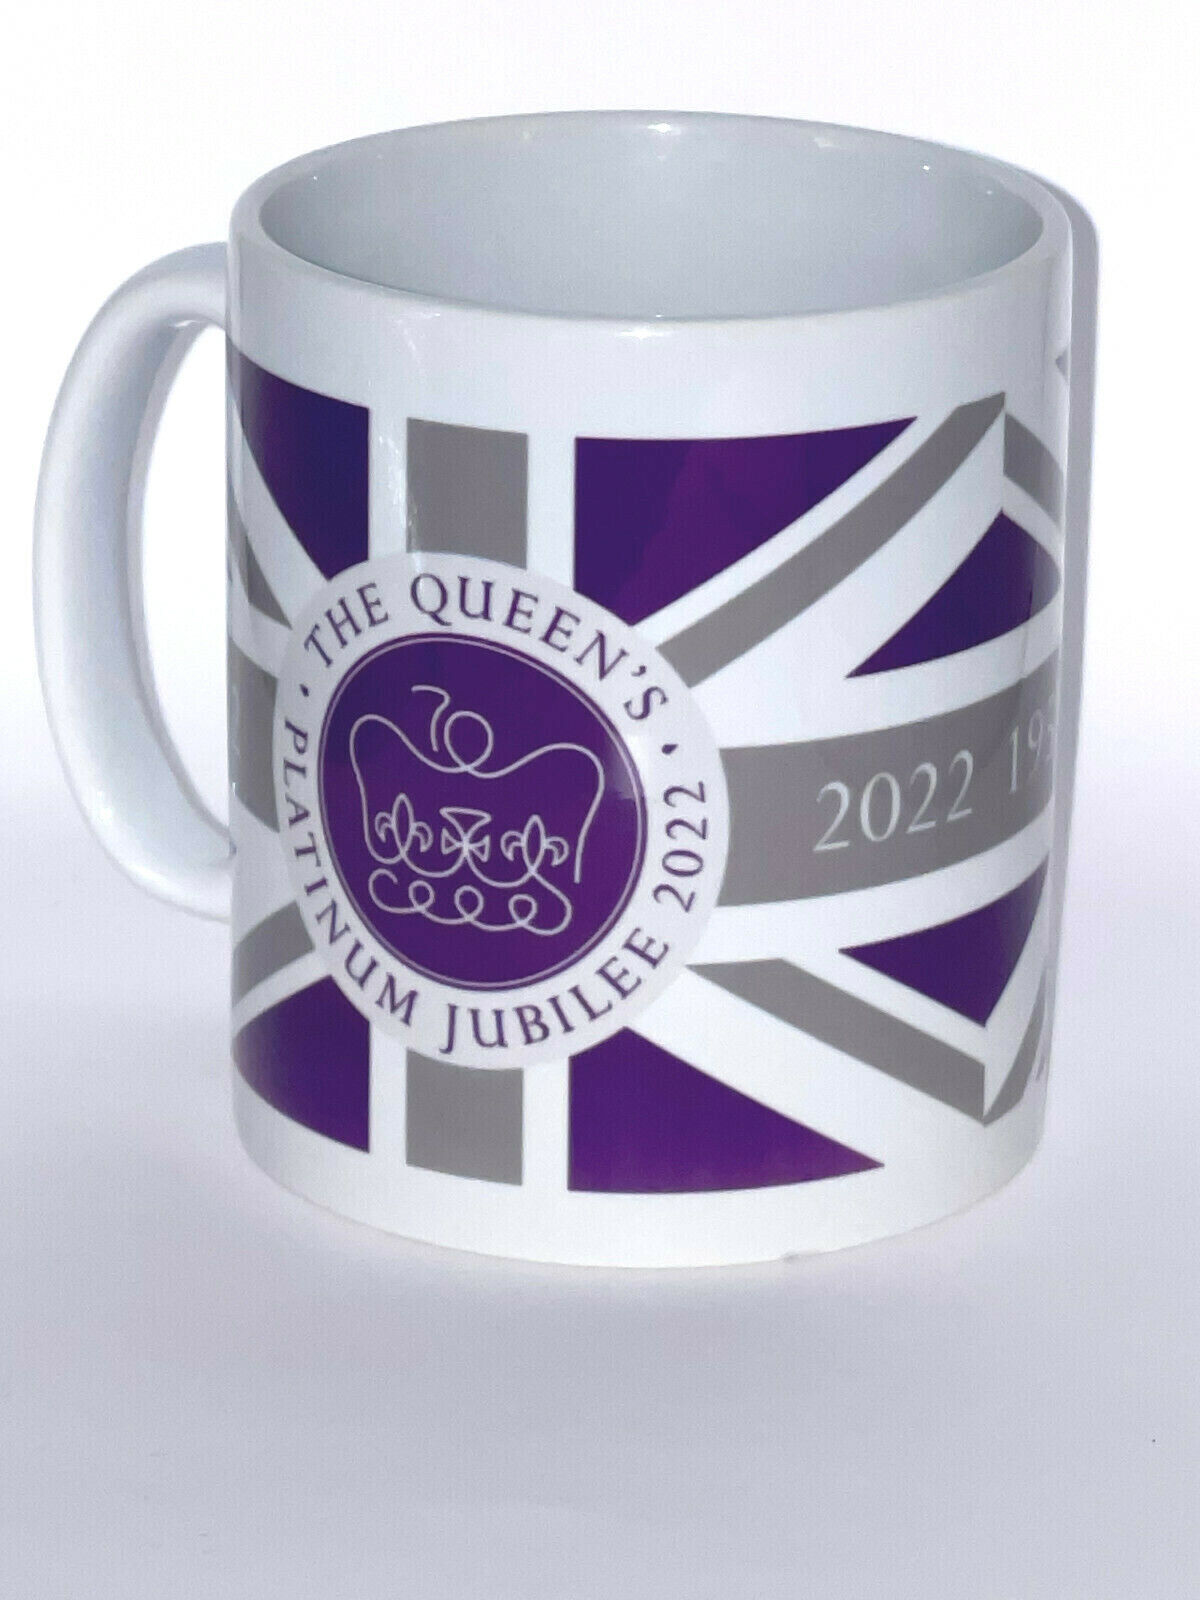 Queen Elizabeth's platinum jubilee mug Keepsake Garden Party Official Logo